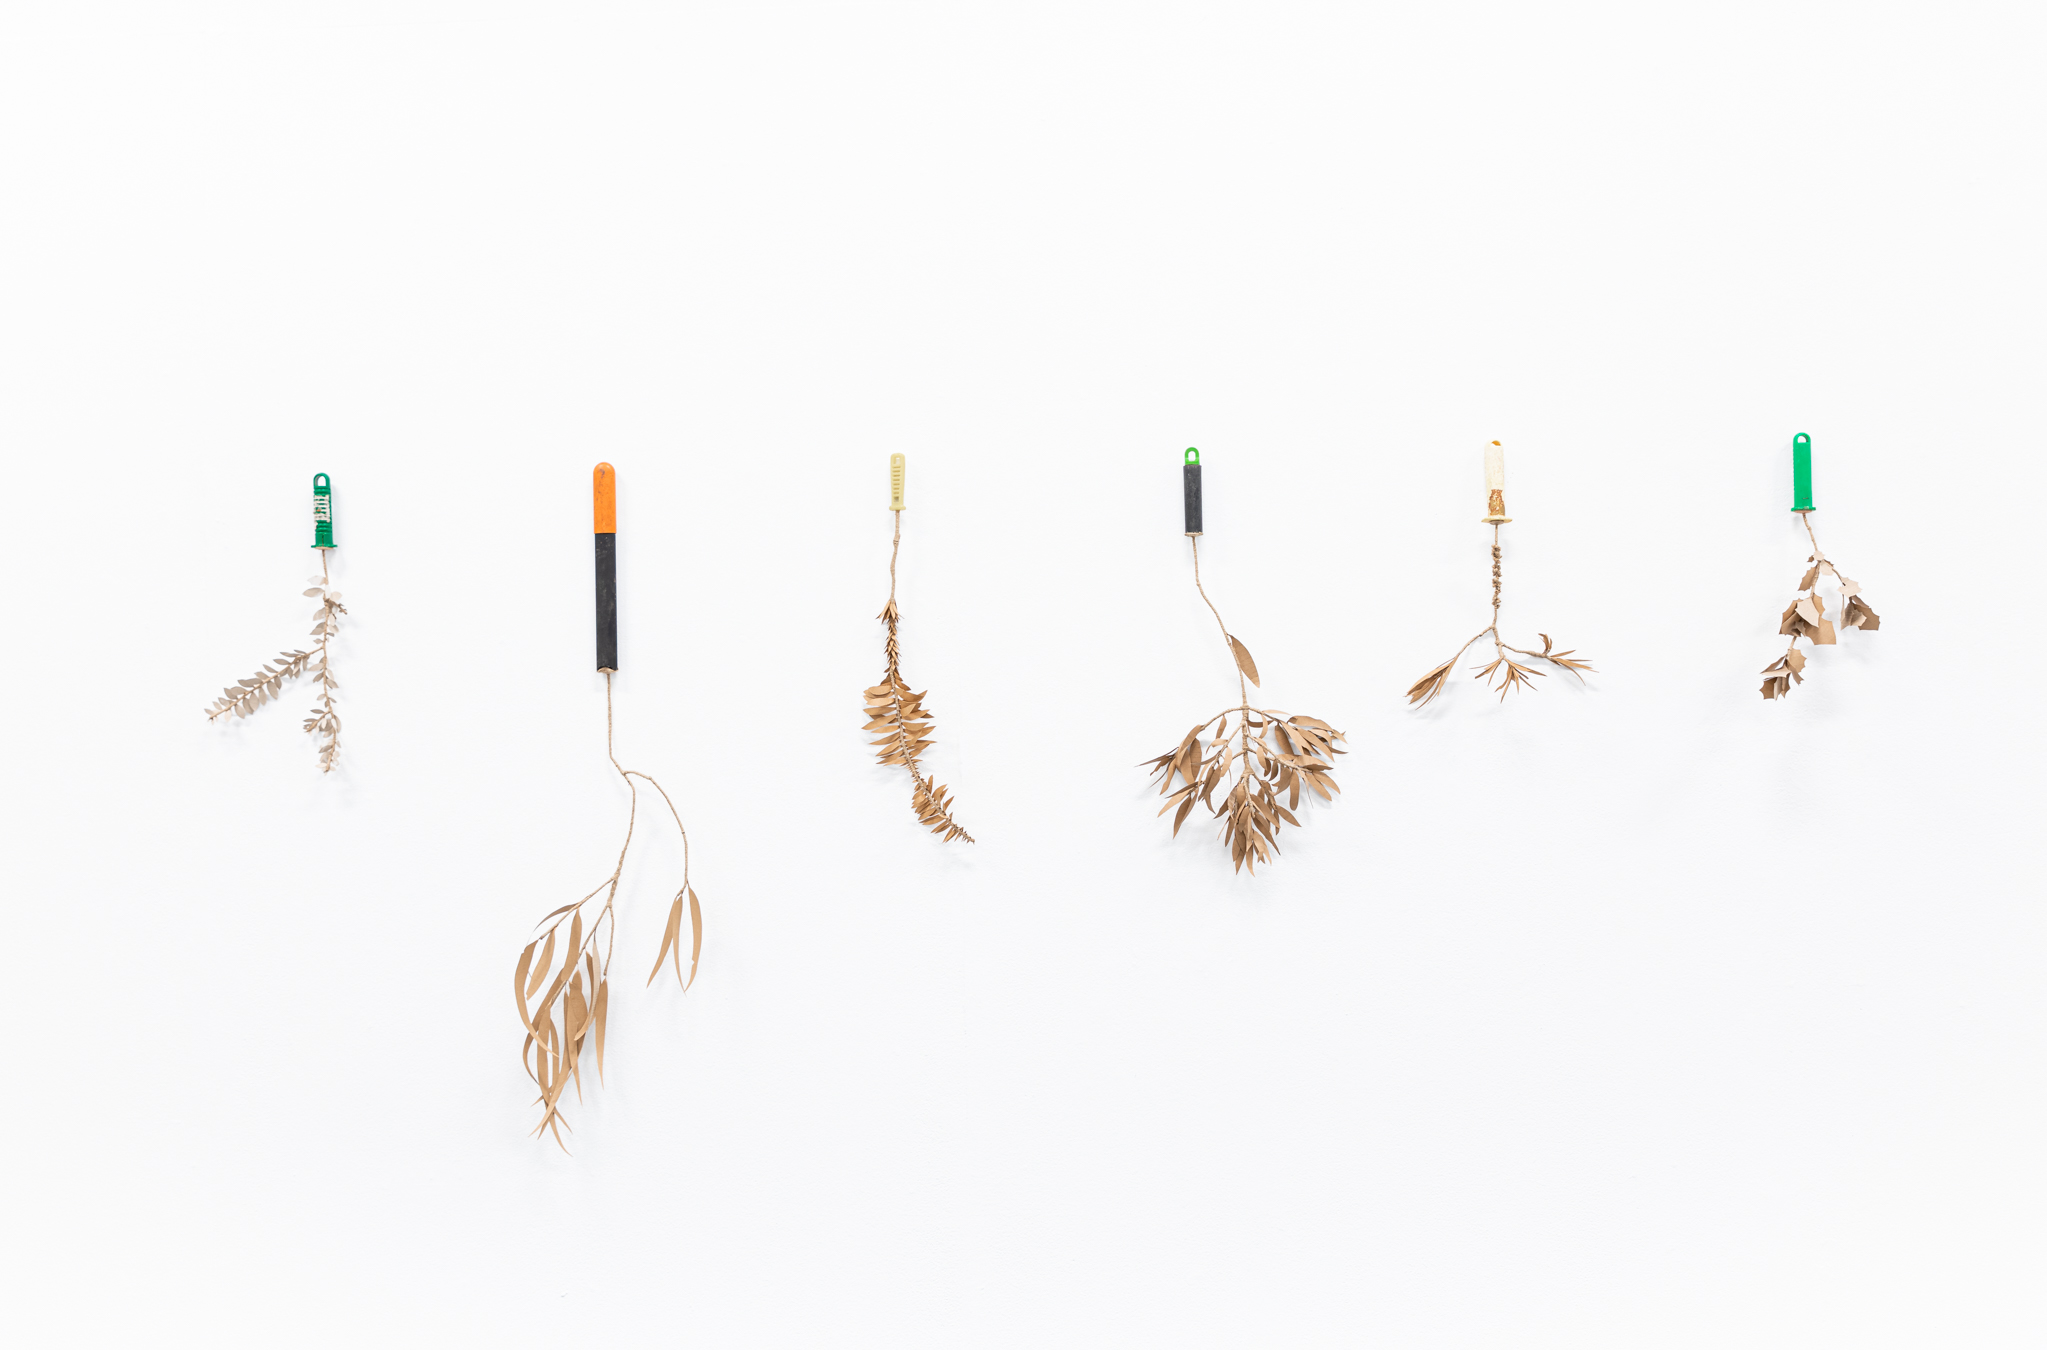 Tools for Regeneration by Susan Gourley | Lethbridge Landscape Prize 2021 Finalists | Lethbridge Gallery